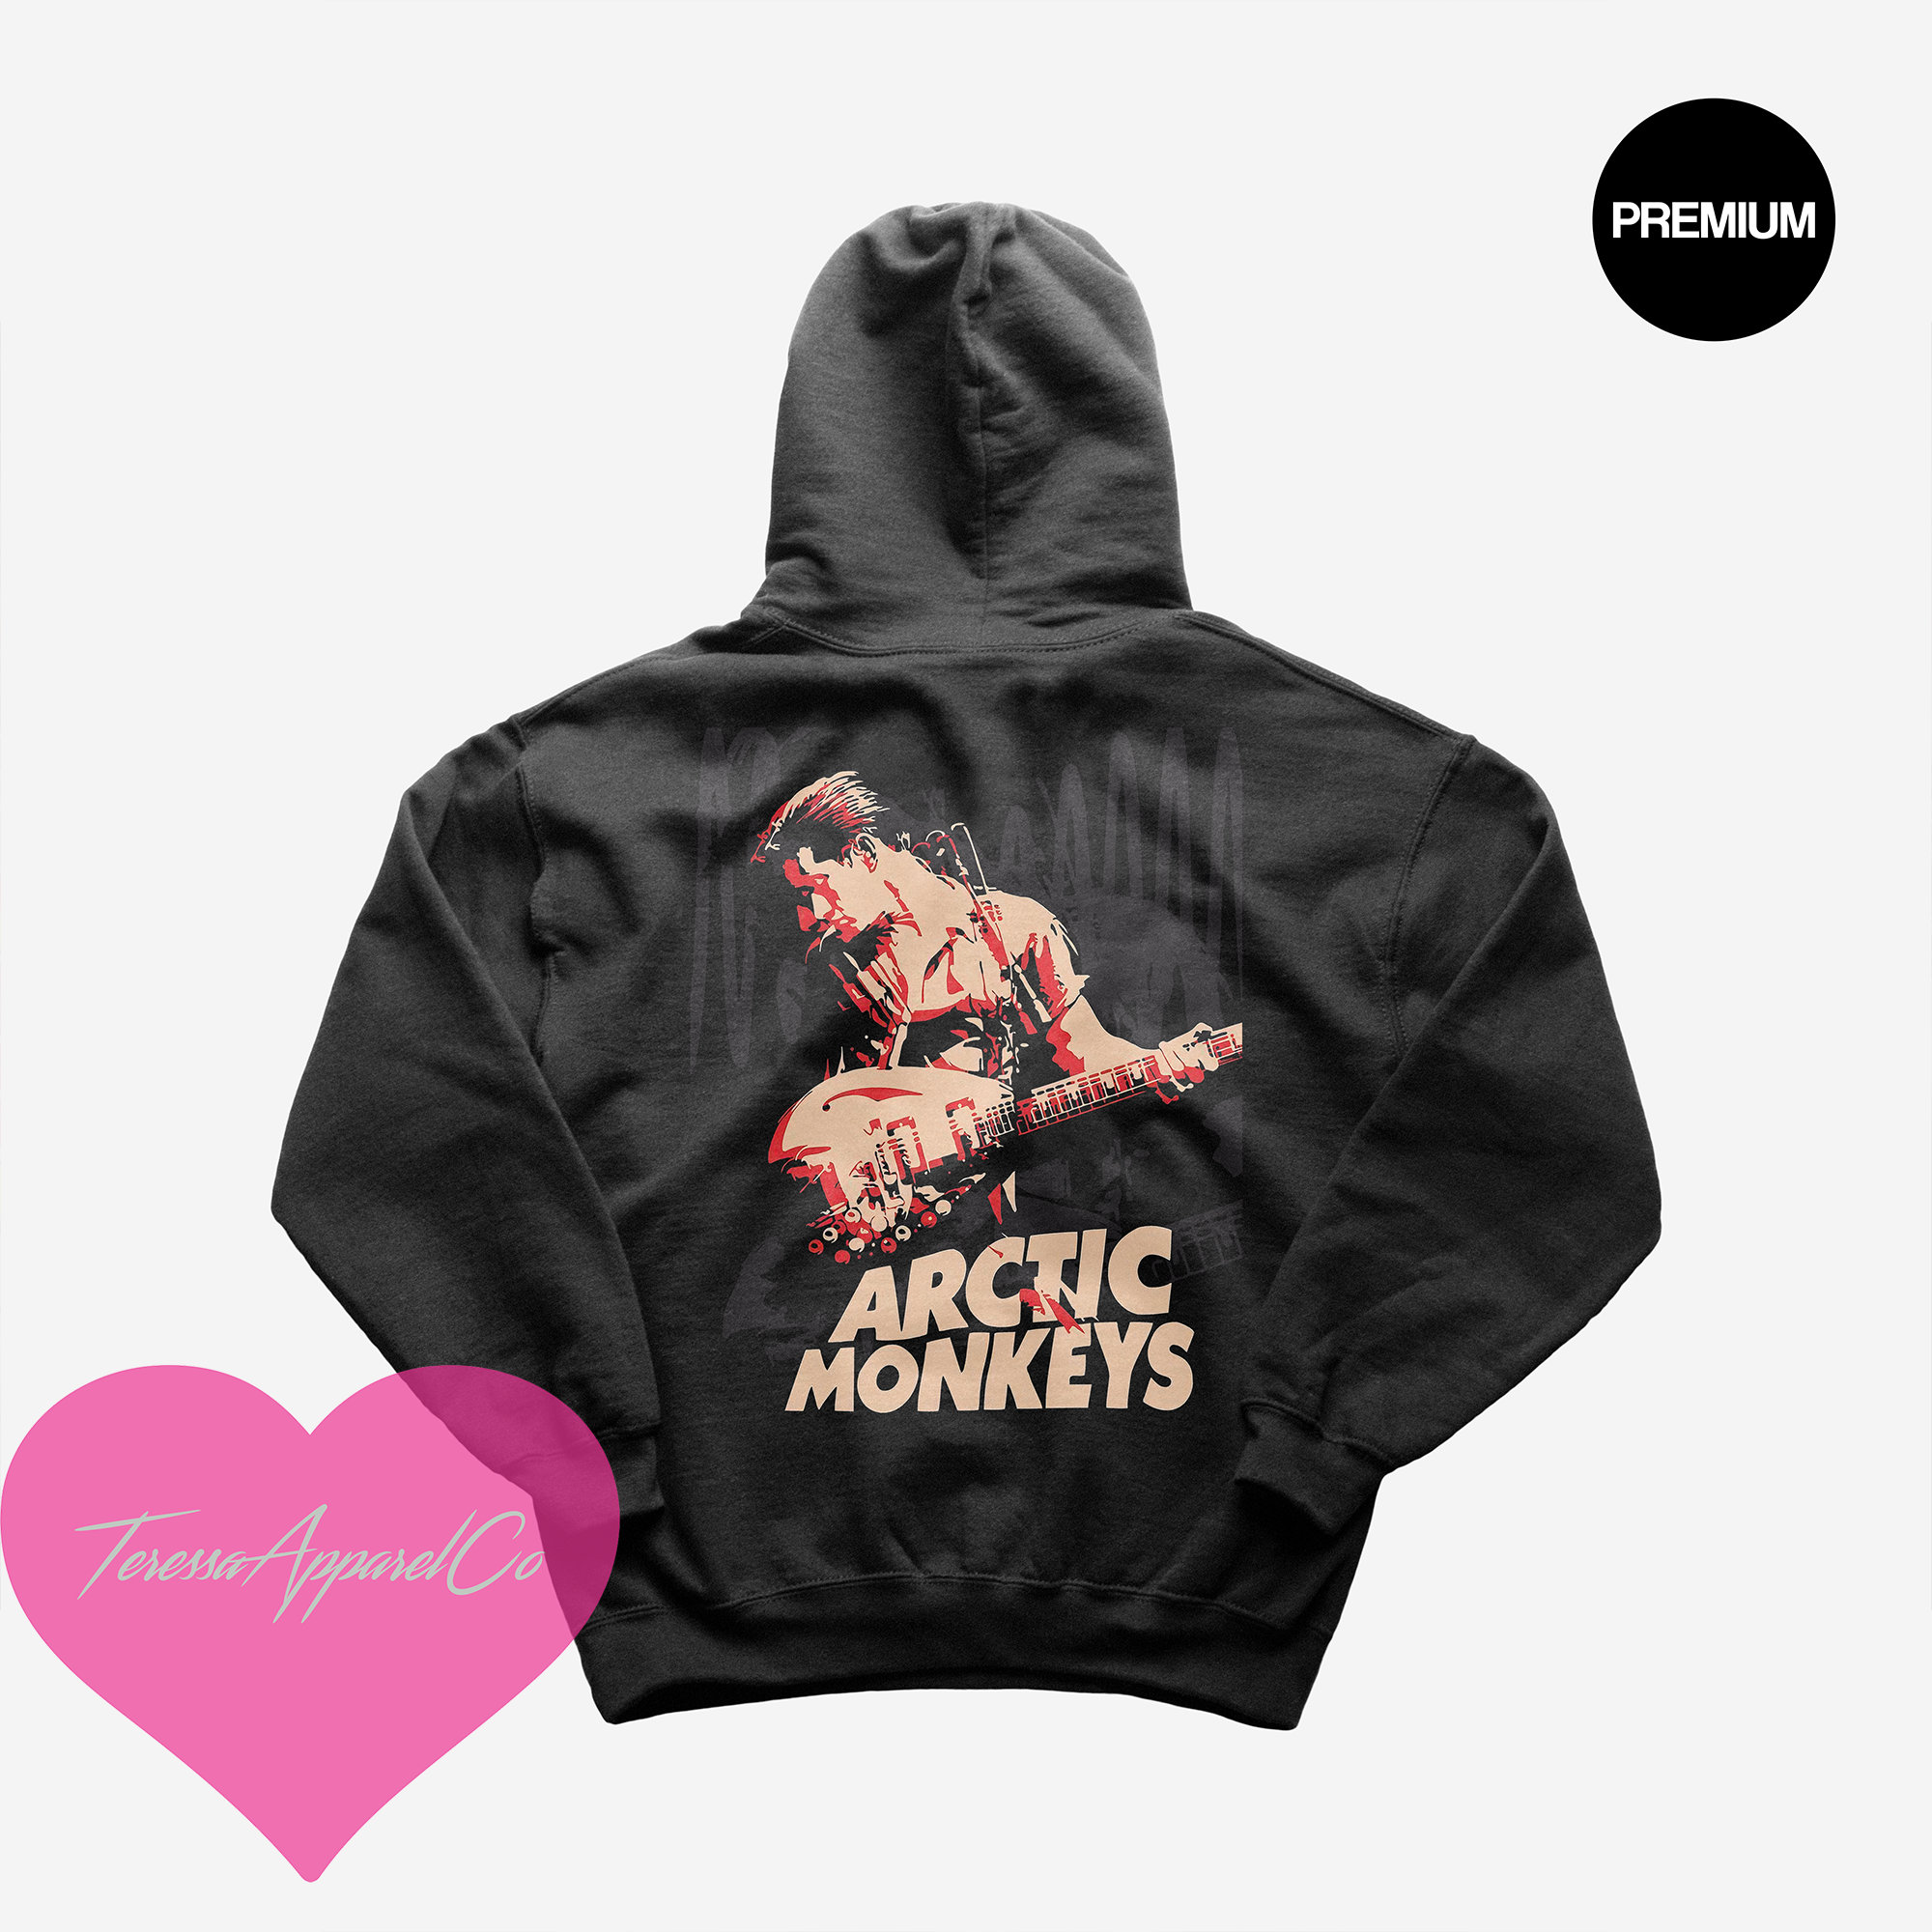 Discover Limited Arctic Monkeys Alex Turner Hoodie